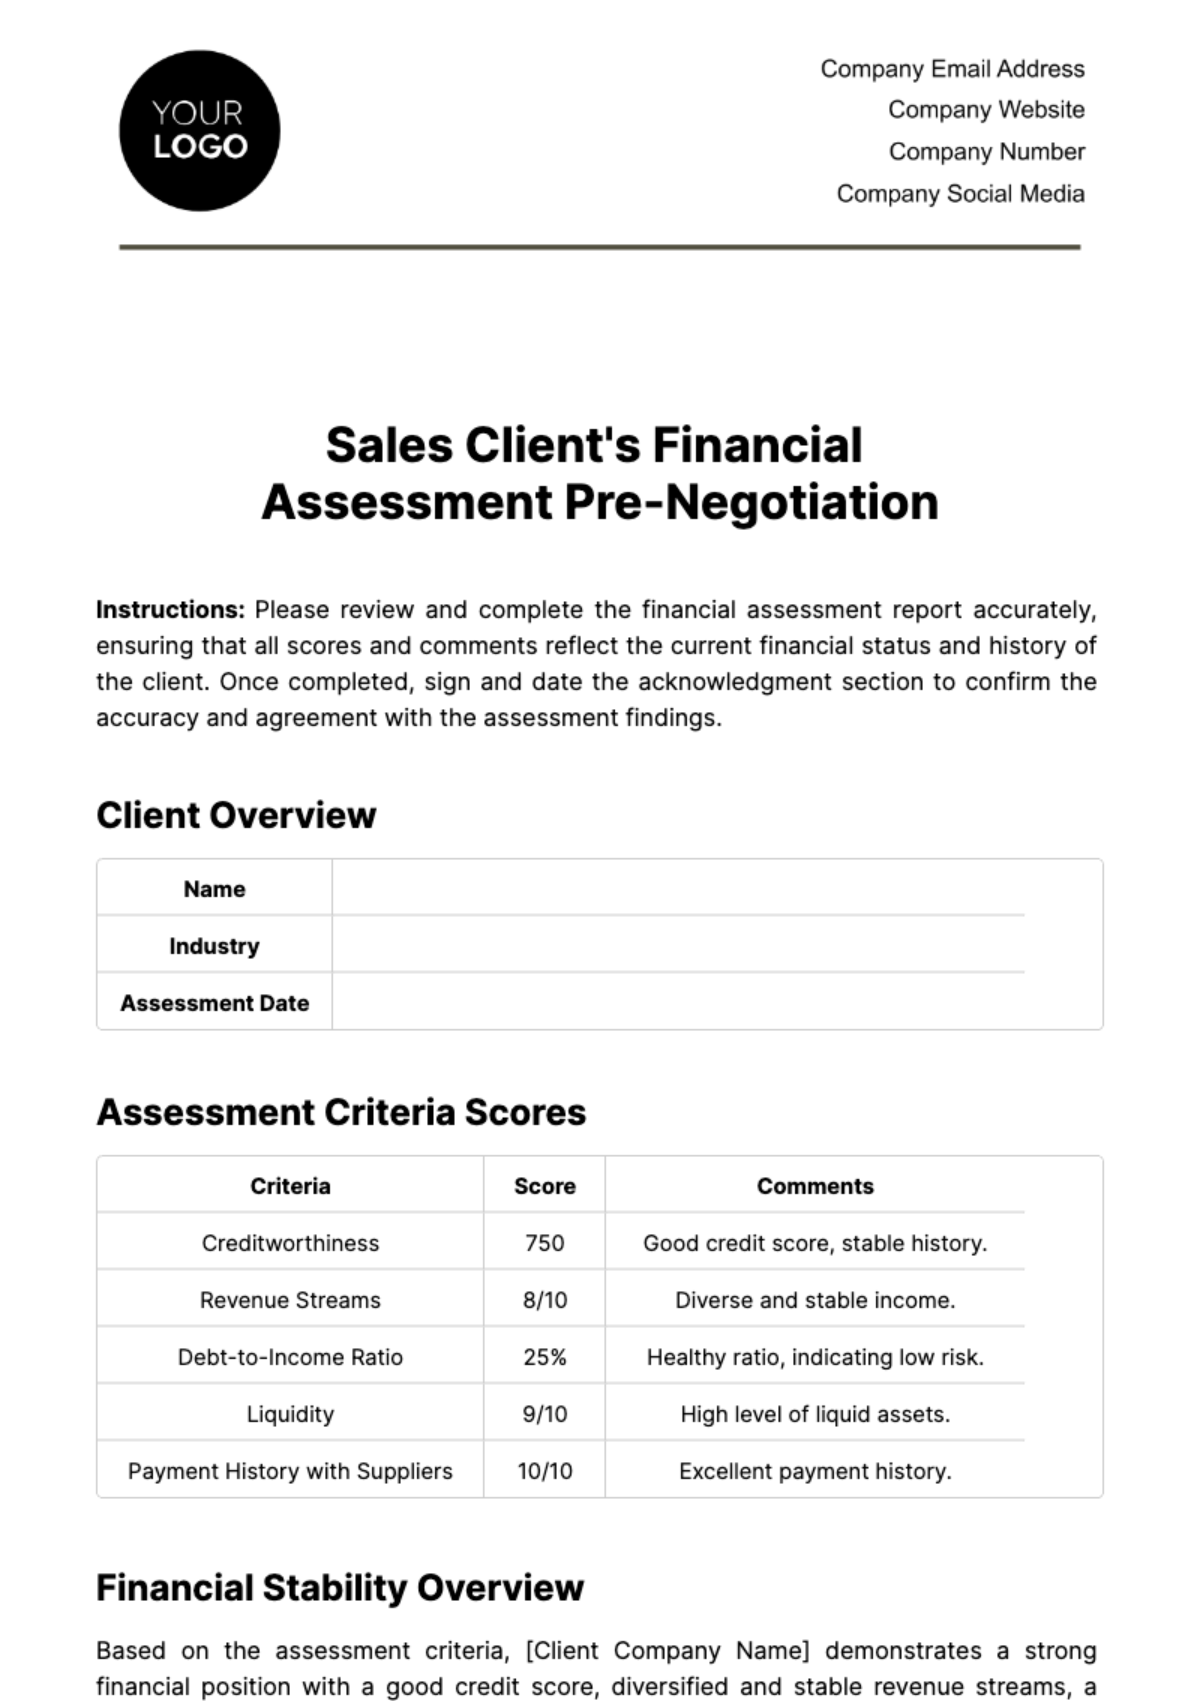 Sales Client's Financial Assessment Pre-Negotiation Template